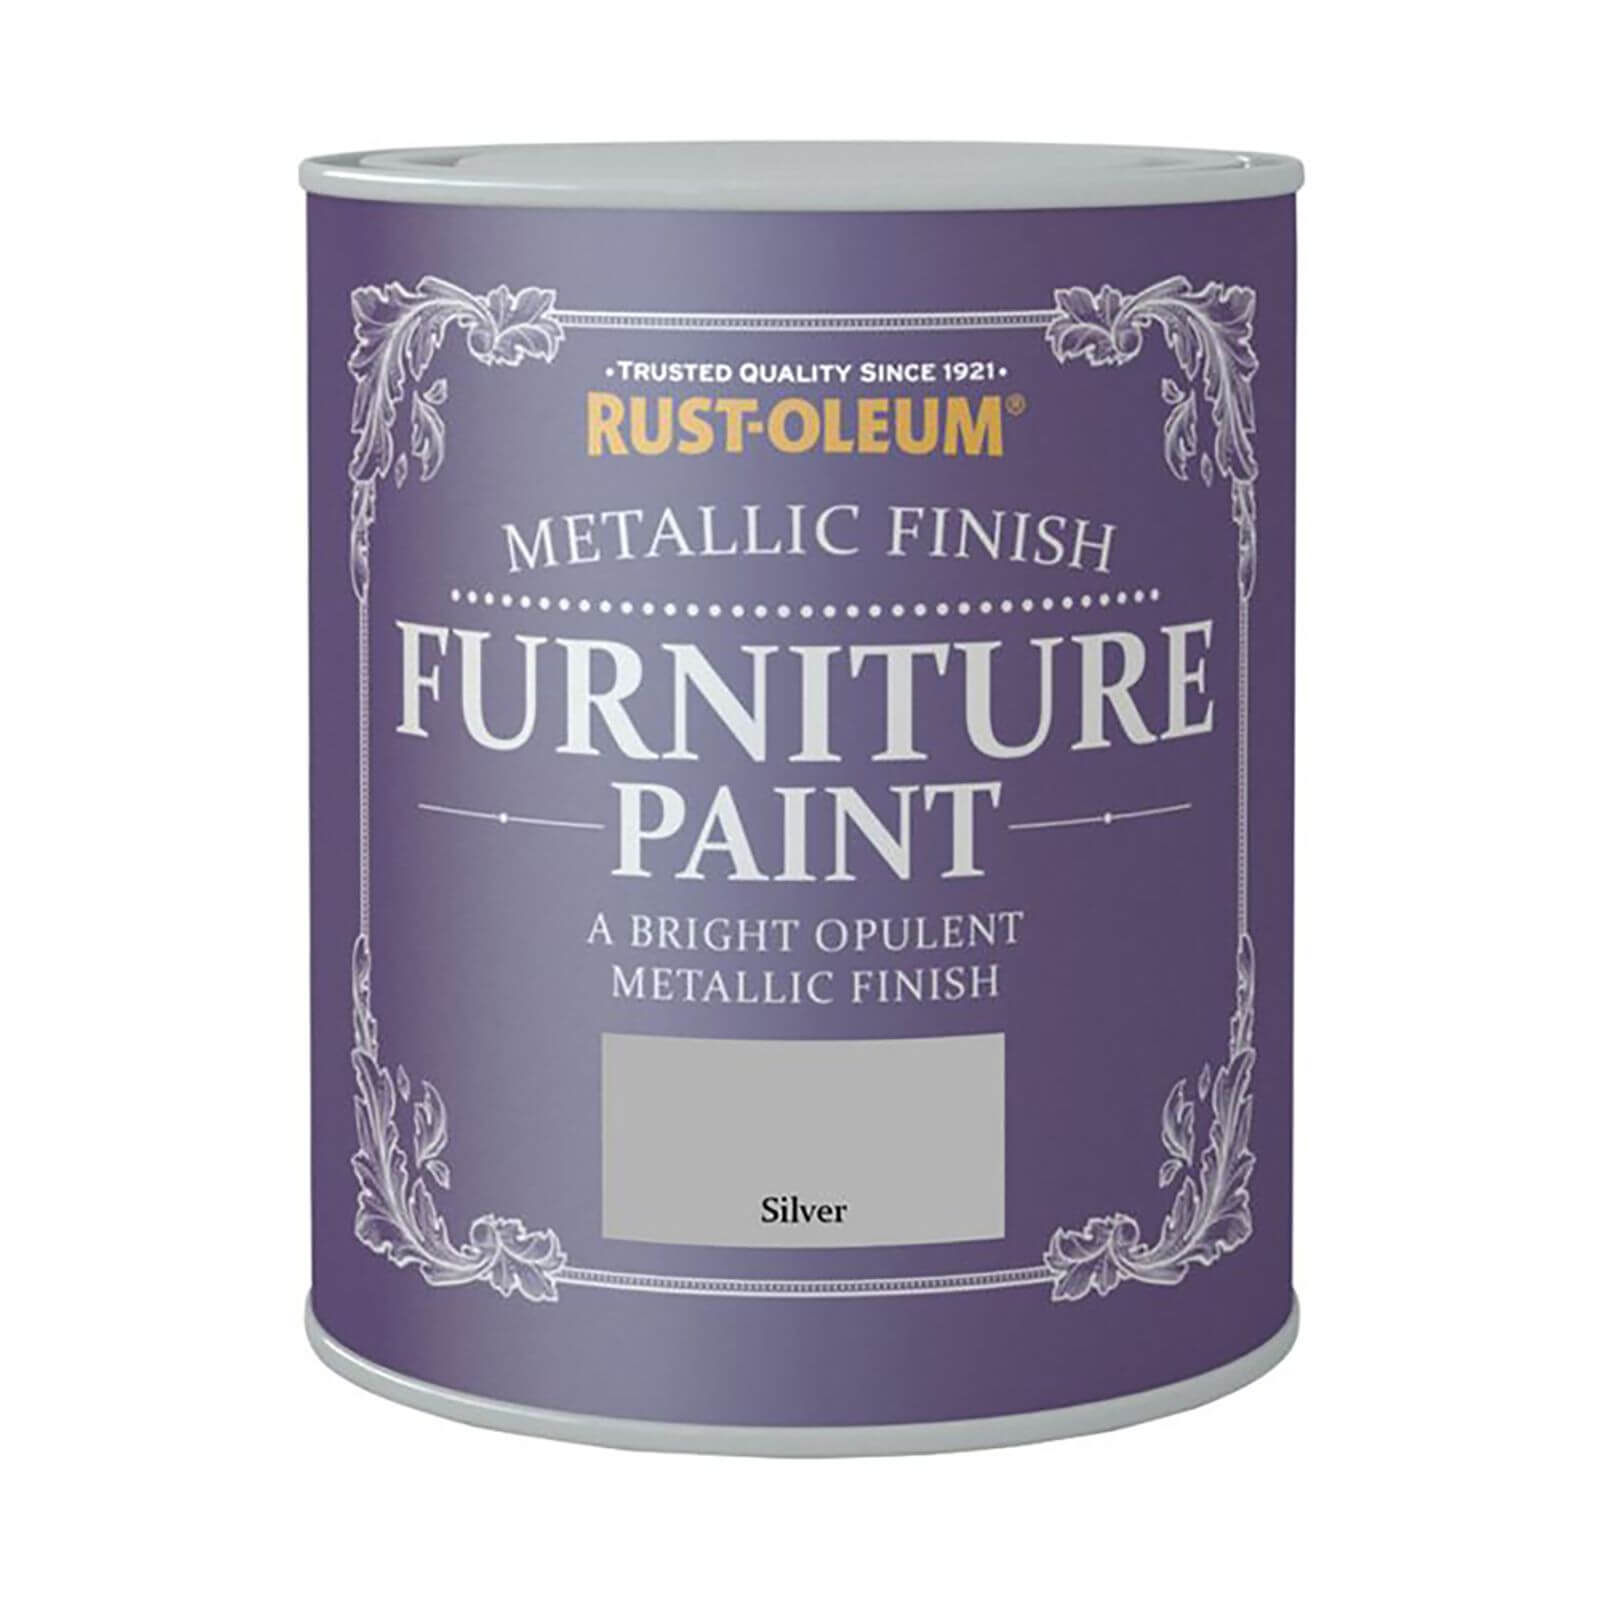 Rust-Oleum Metallic Furniture Paint Silver - 125ml